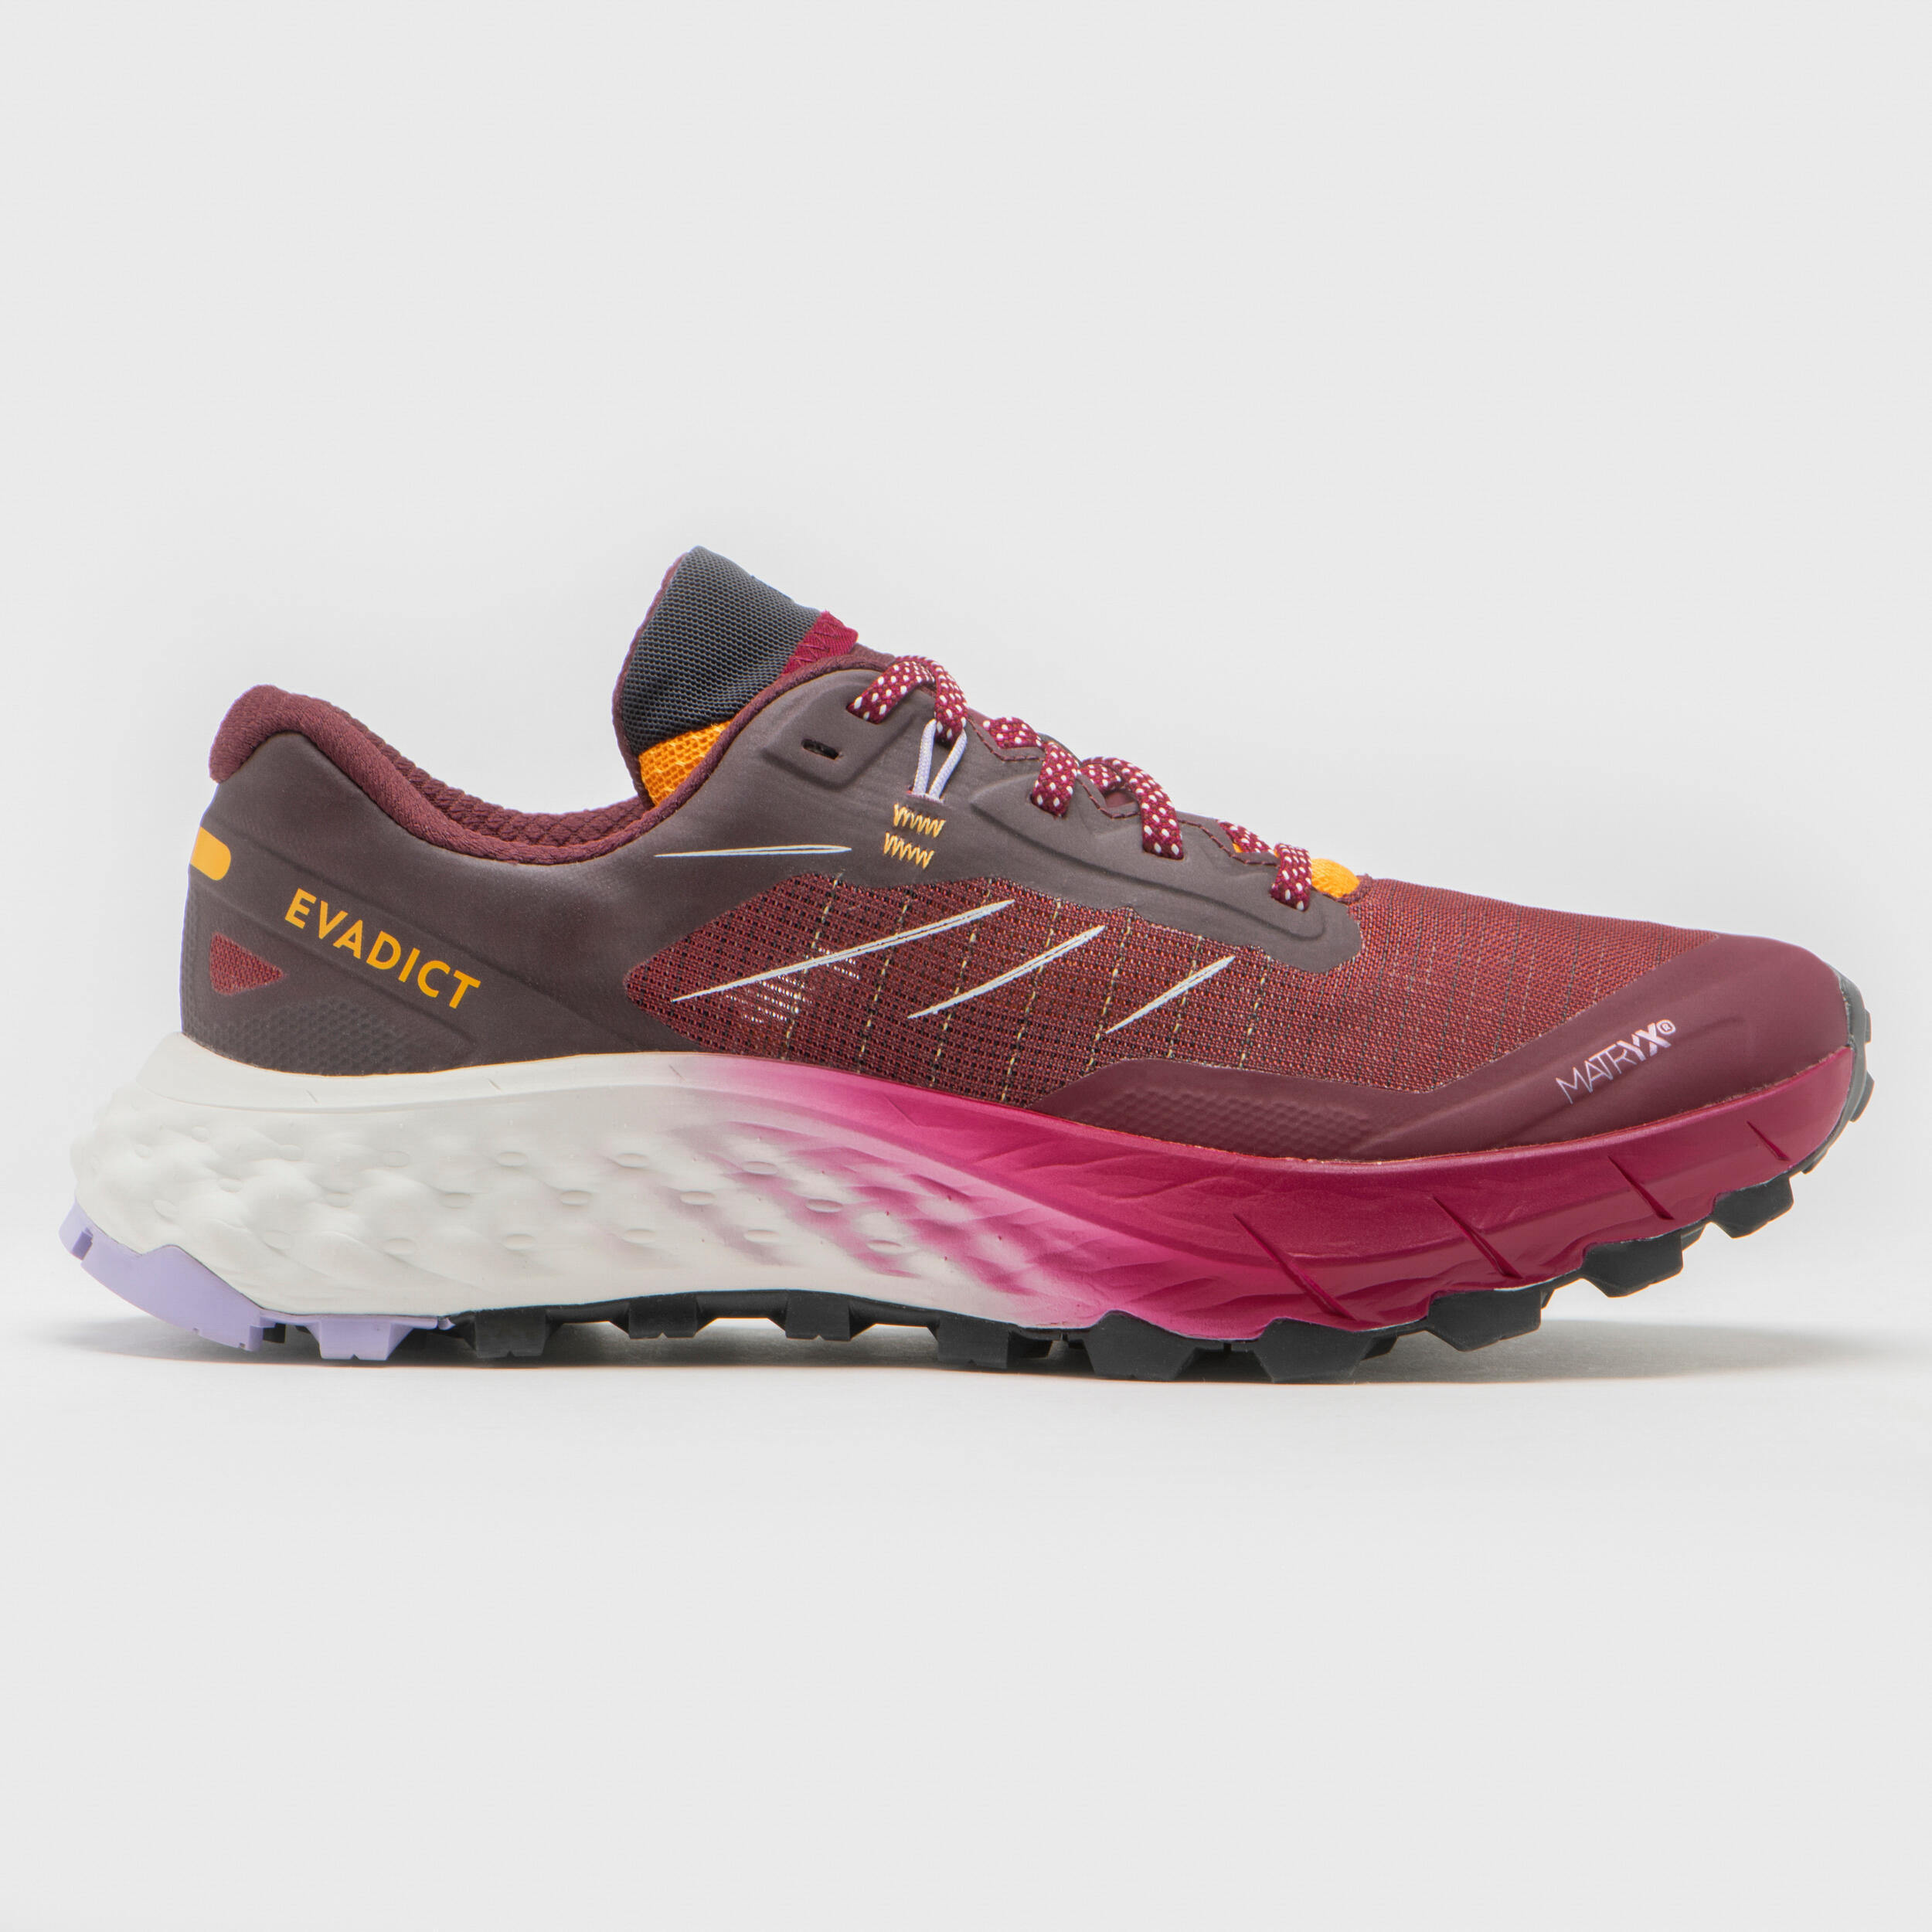 MT CUSHION 2 women's trail running shoes - Raspberry pink 3/10